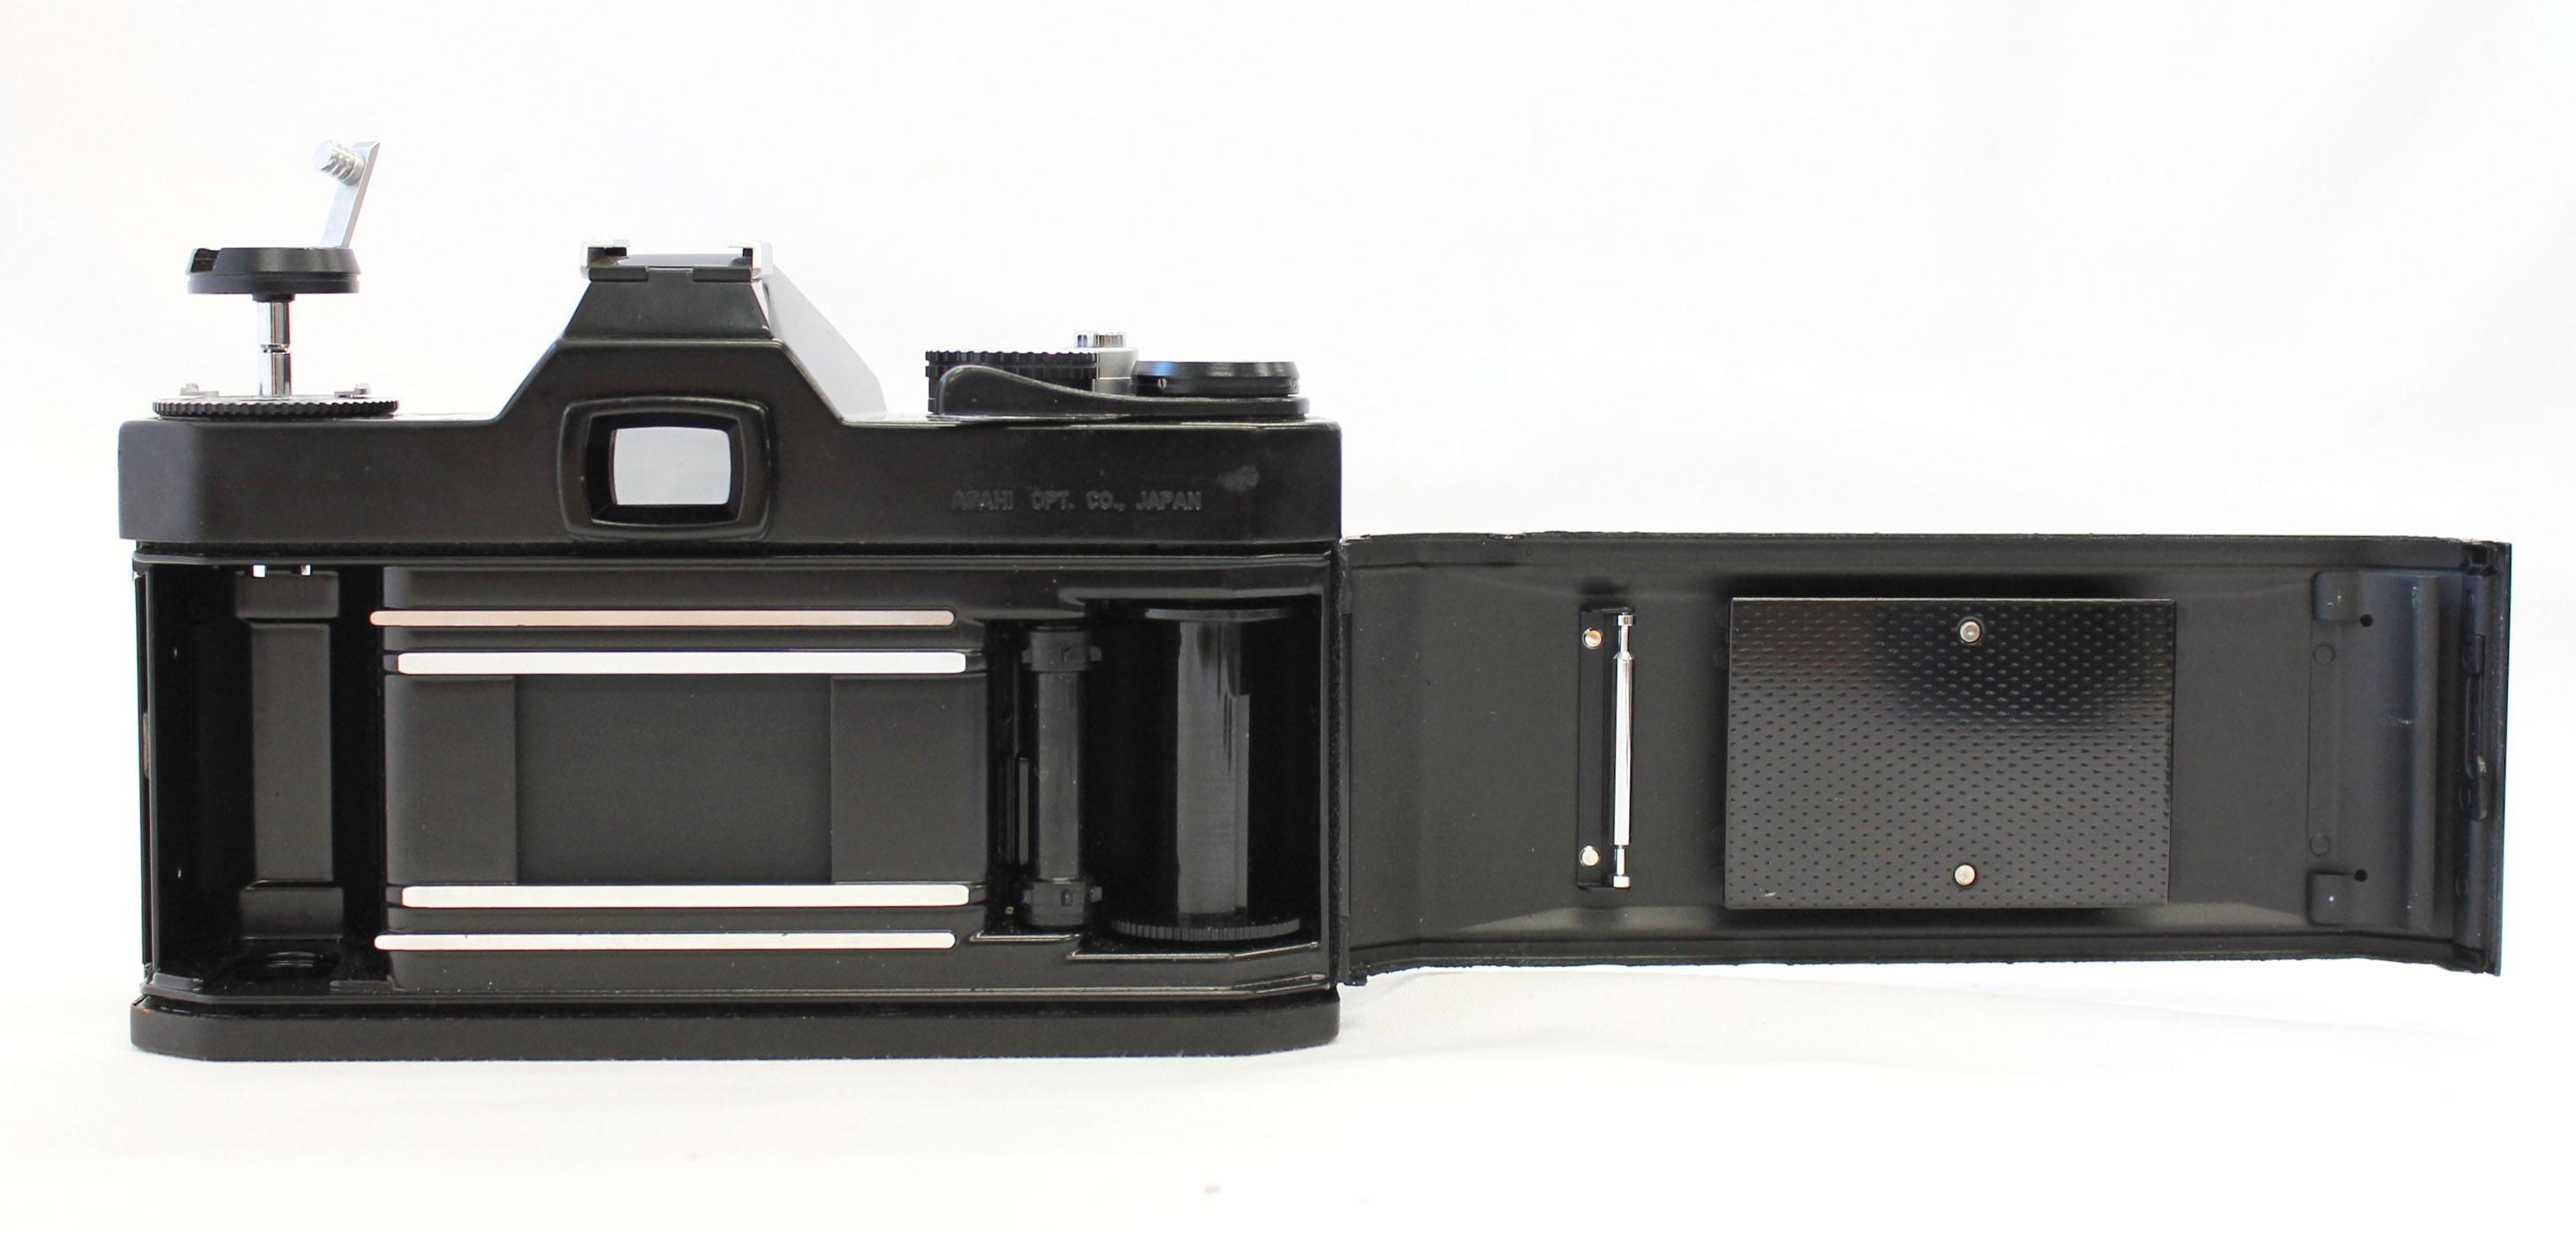 Asahi Pentax Spotmatic F SPF 35mm SLR Camera Black w/ SMC Super-Multi-Coated Takumar 55mm F/1.8 Lens from Japan Photo 10